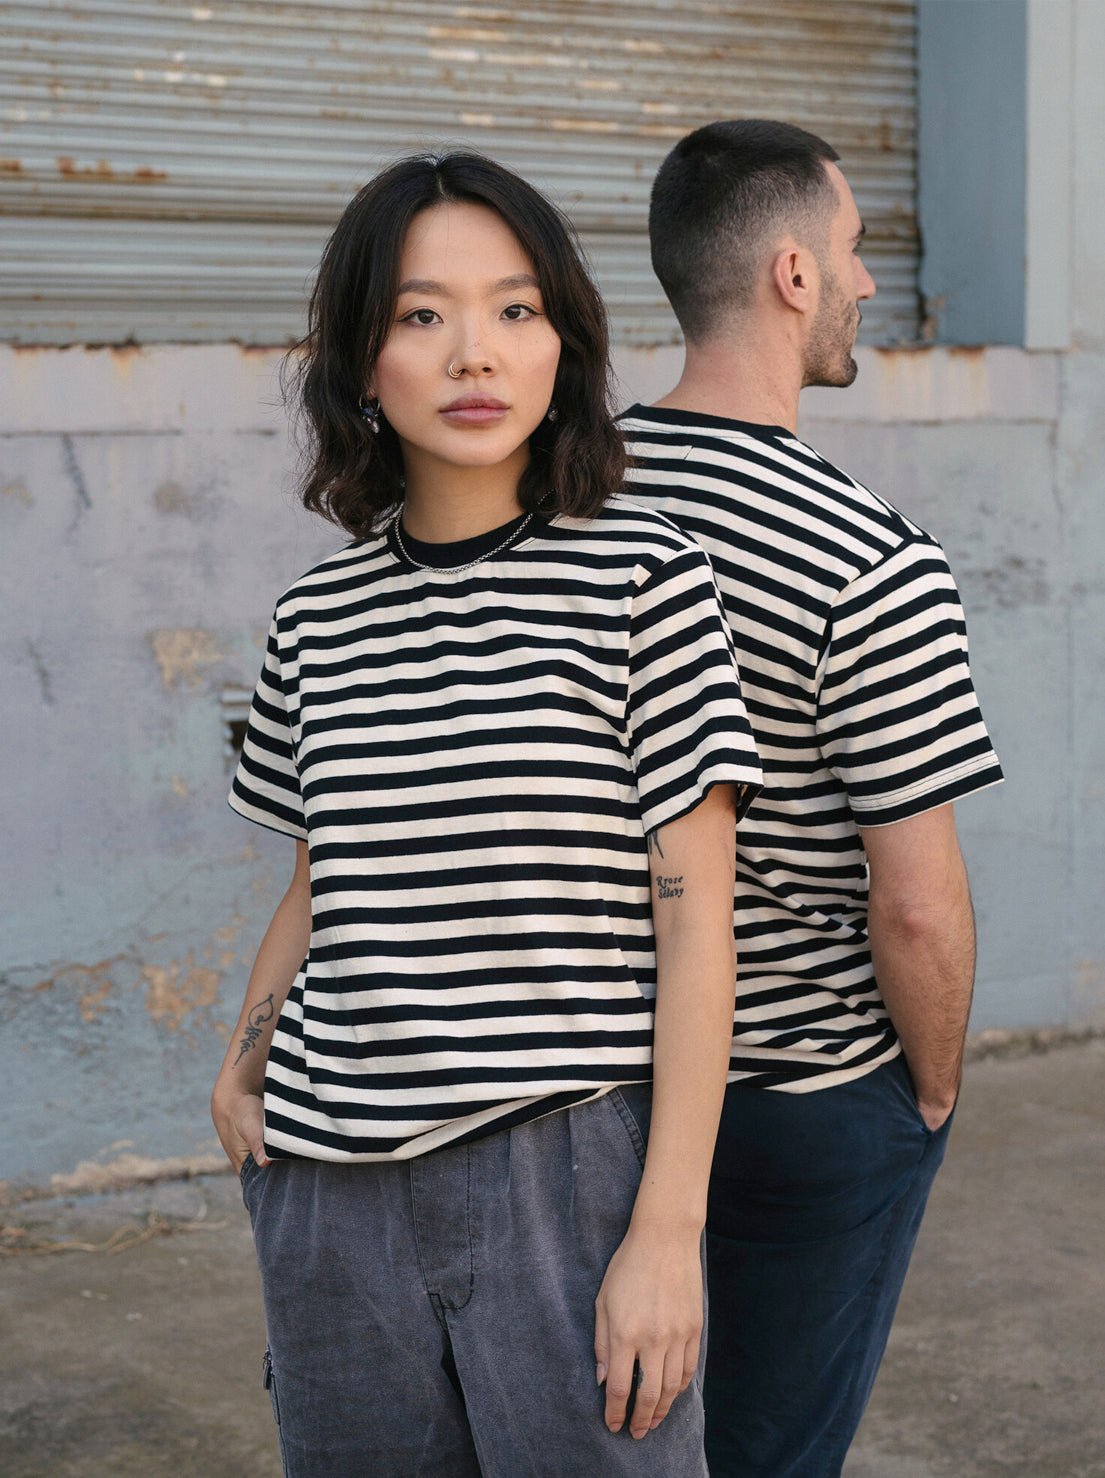 Hemp Clothing Australia - Unisex Boxy Tee - Stripe Black/White